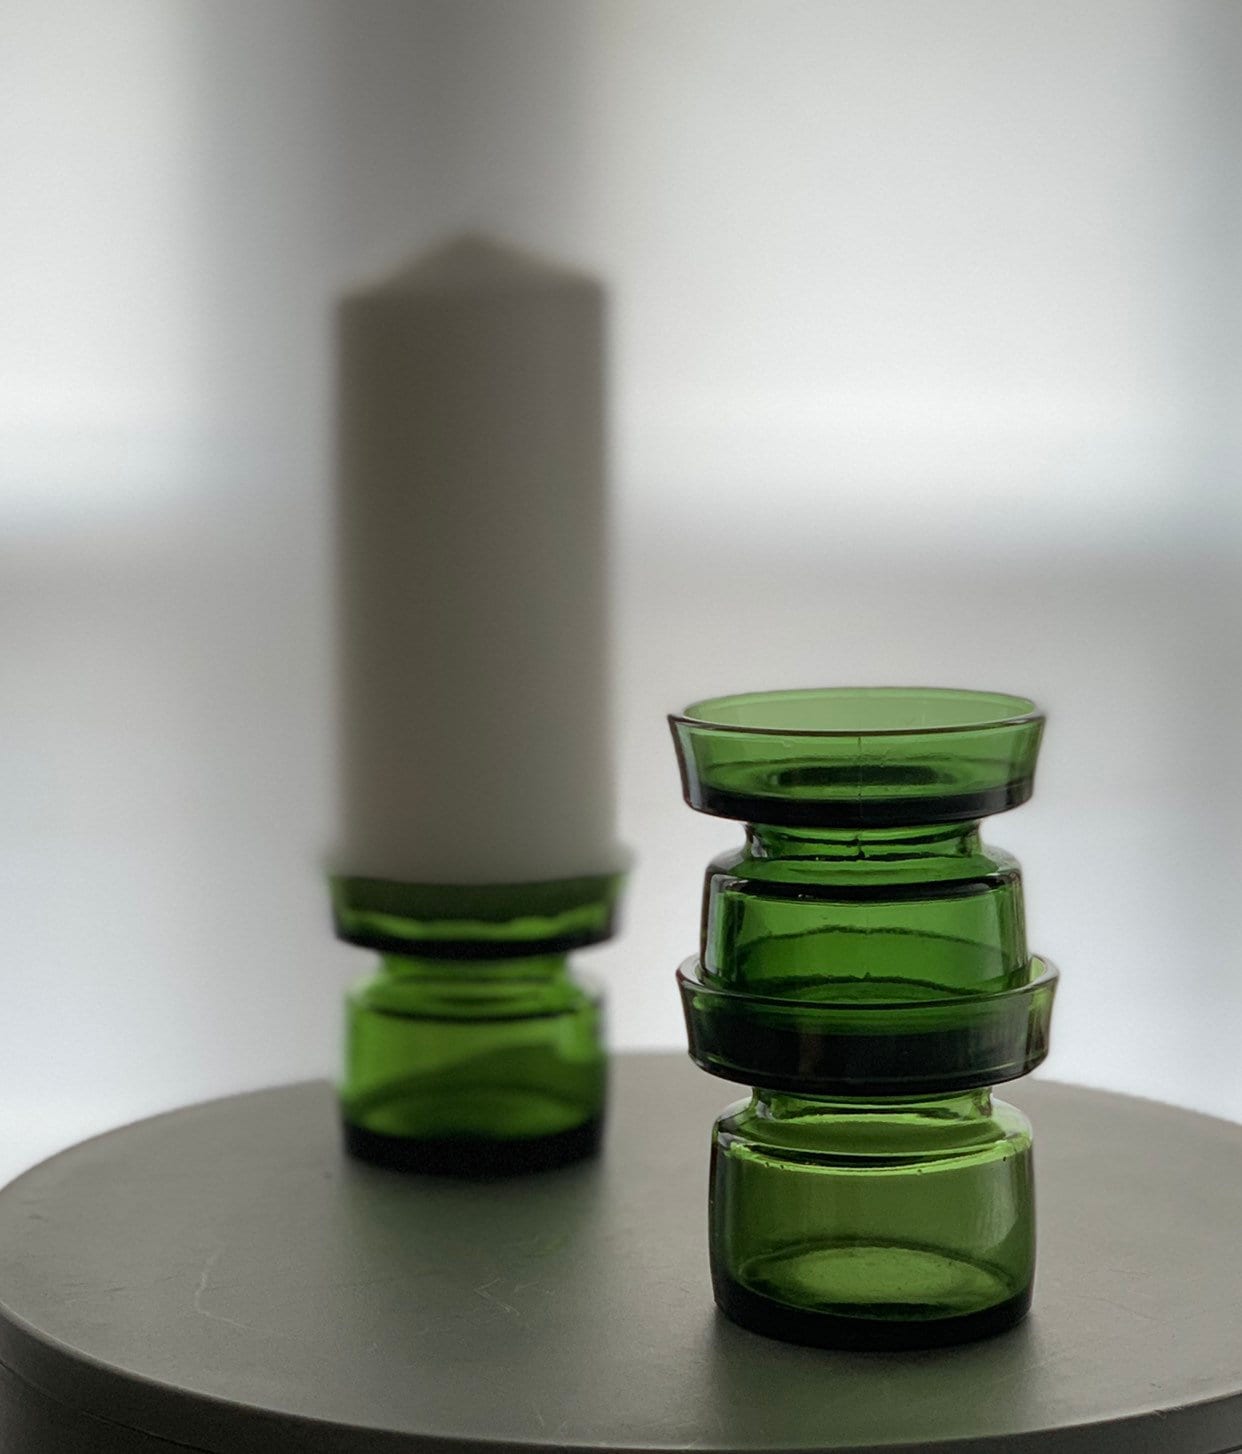 Dansk Design Waxed Filled Candleholder, designed by Jens Harald Quistgaard in the 1960s Green Glass Vintage